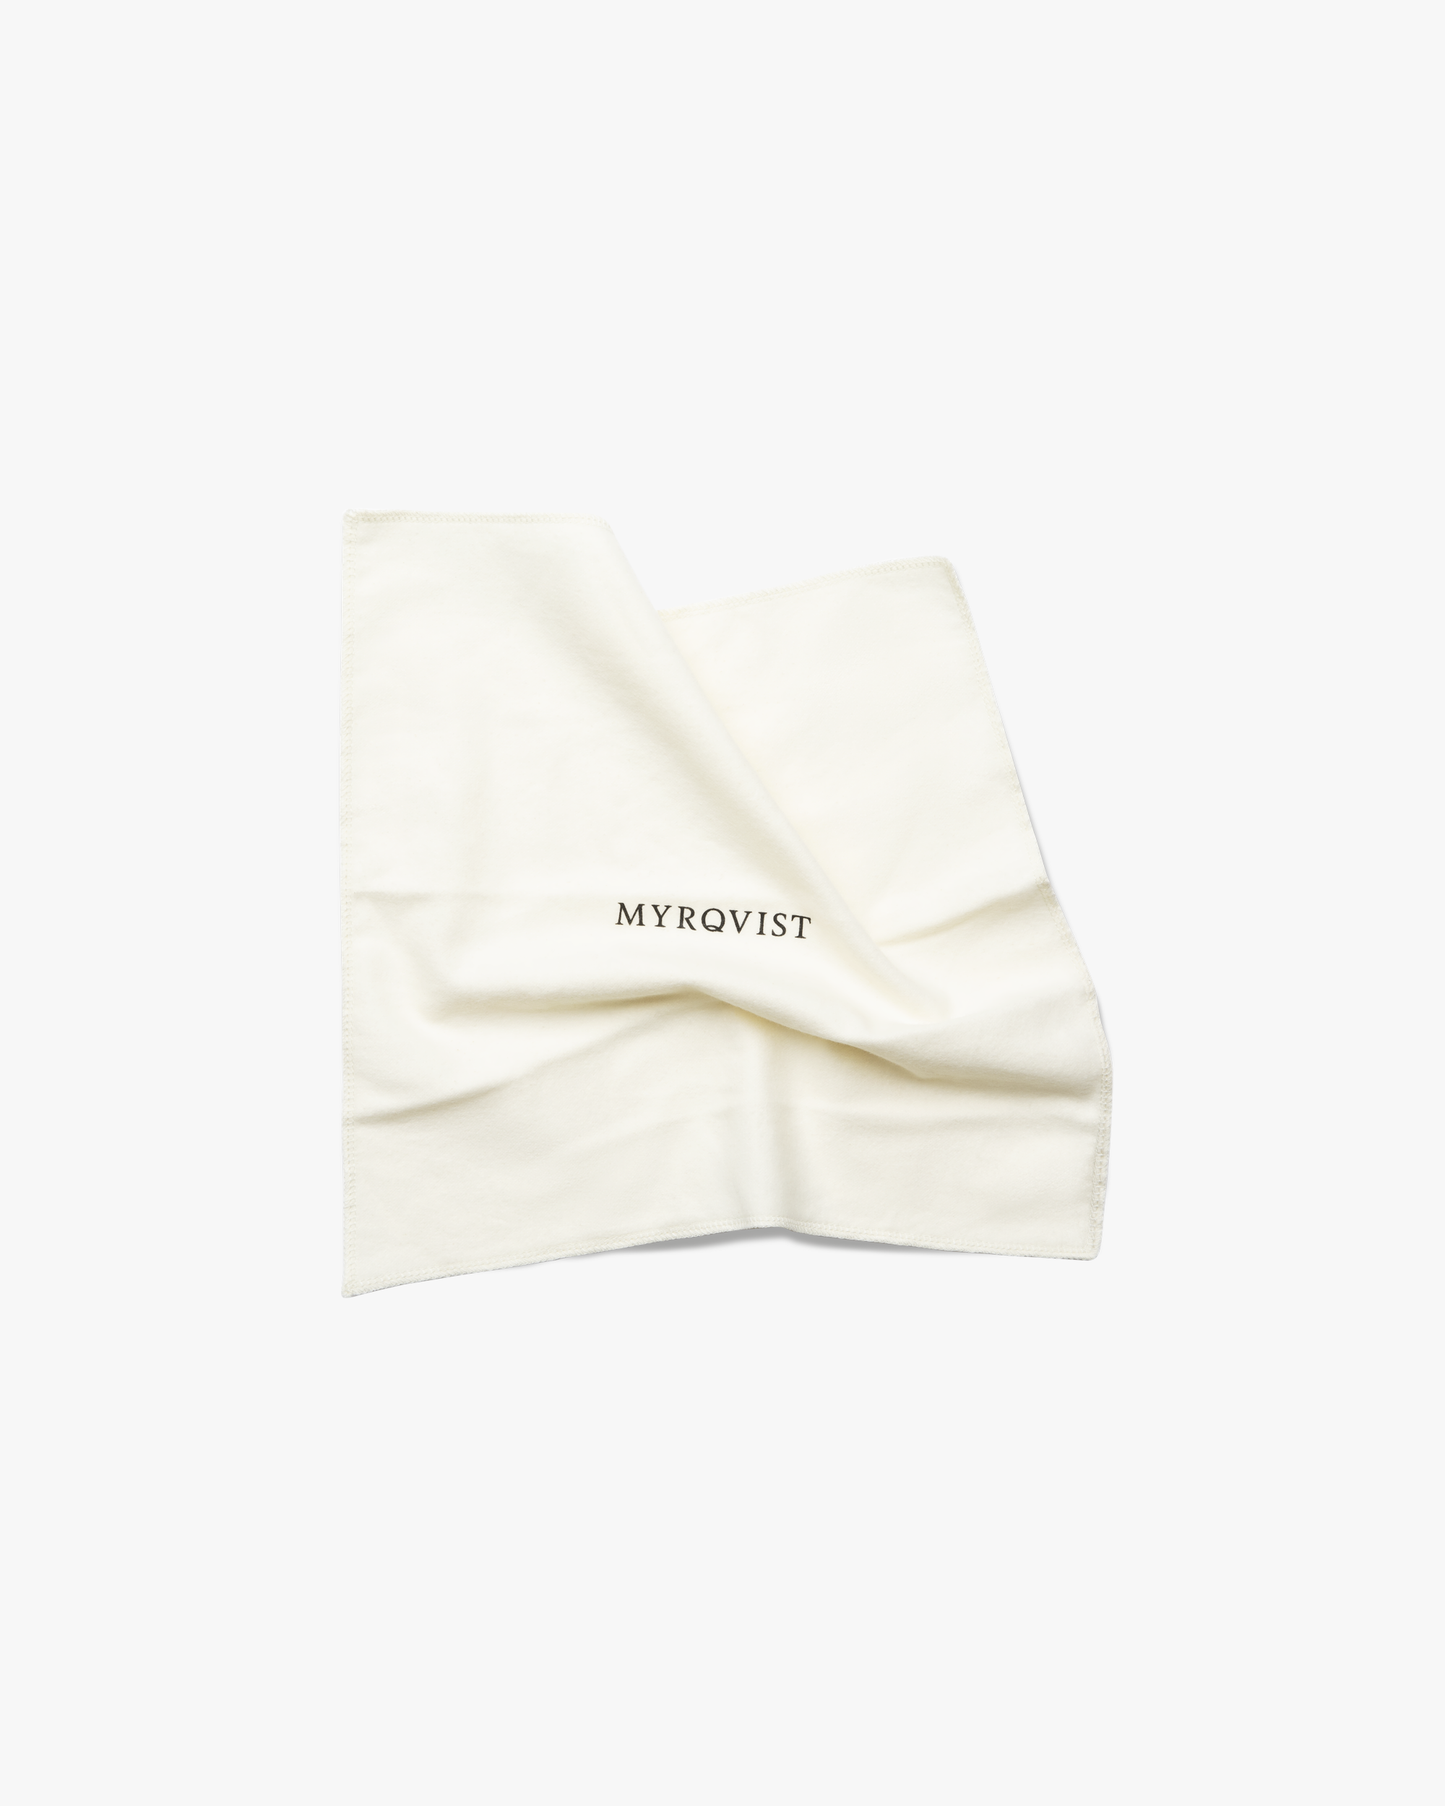 Myrqvist – Polishing Cloth